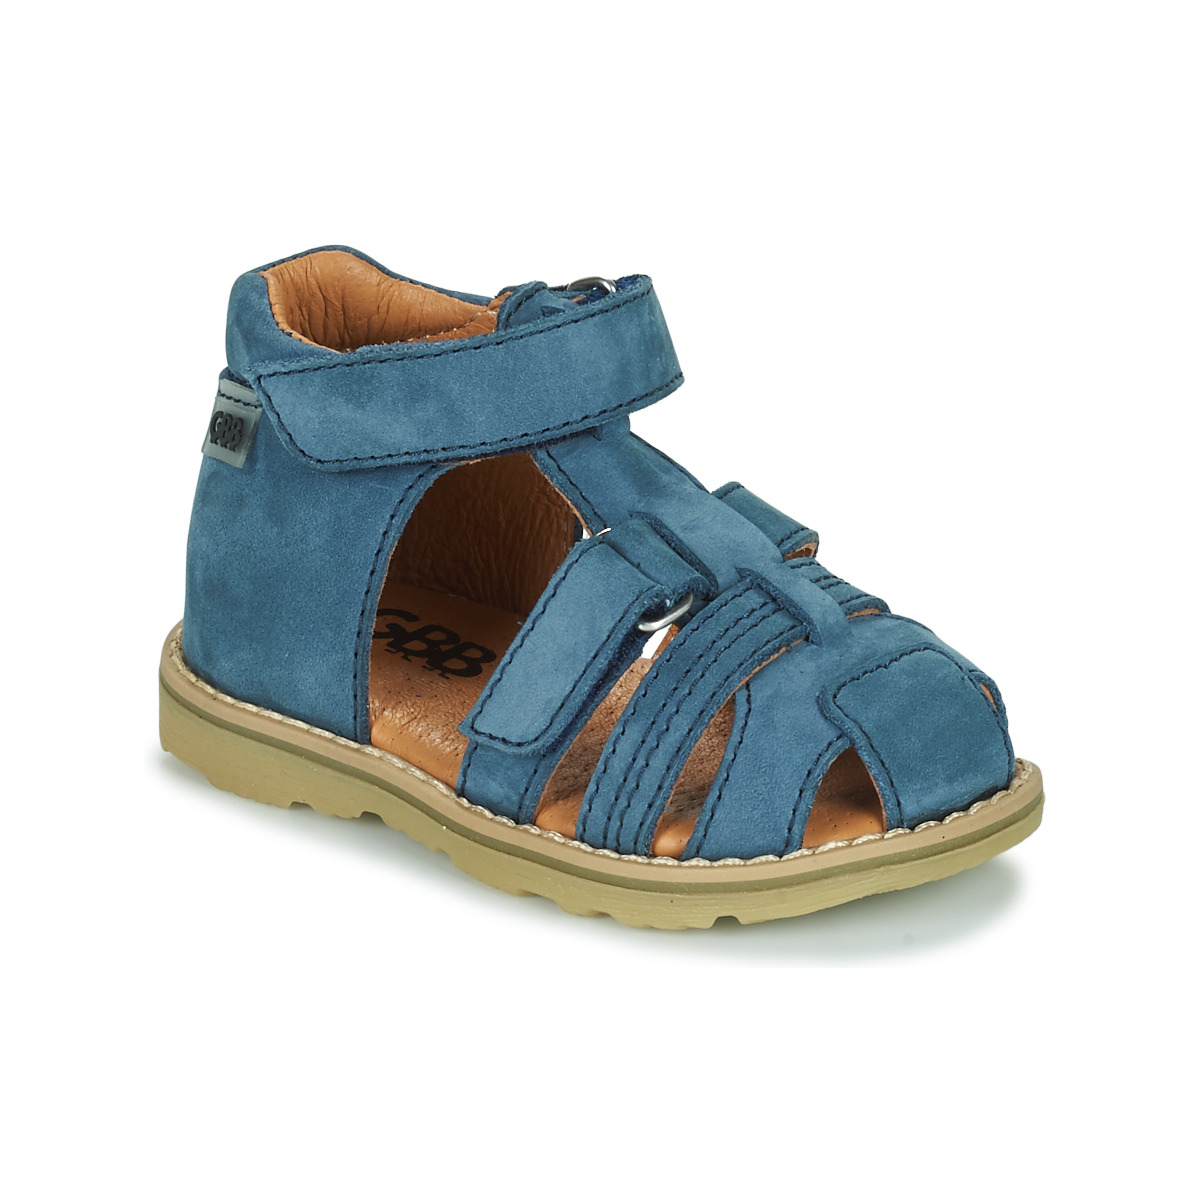 Topánky Chlapec Sandále GBB MITRI Modrá